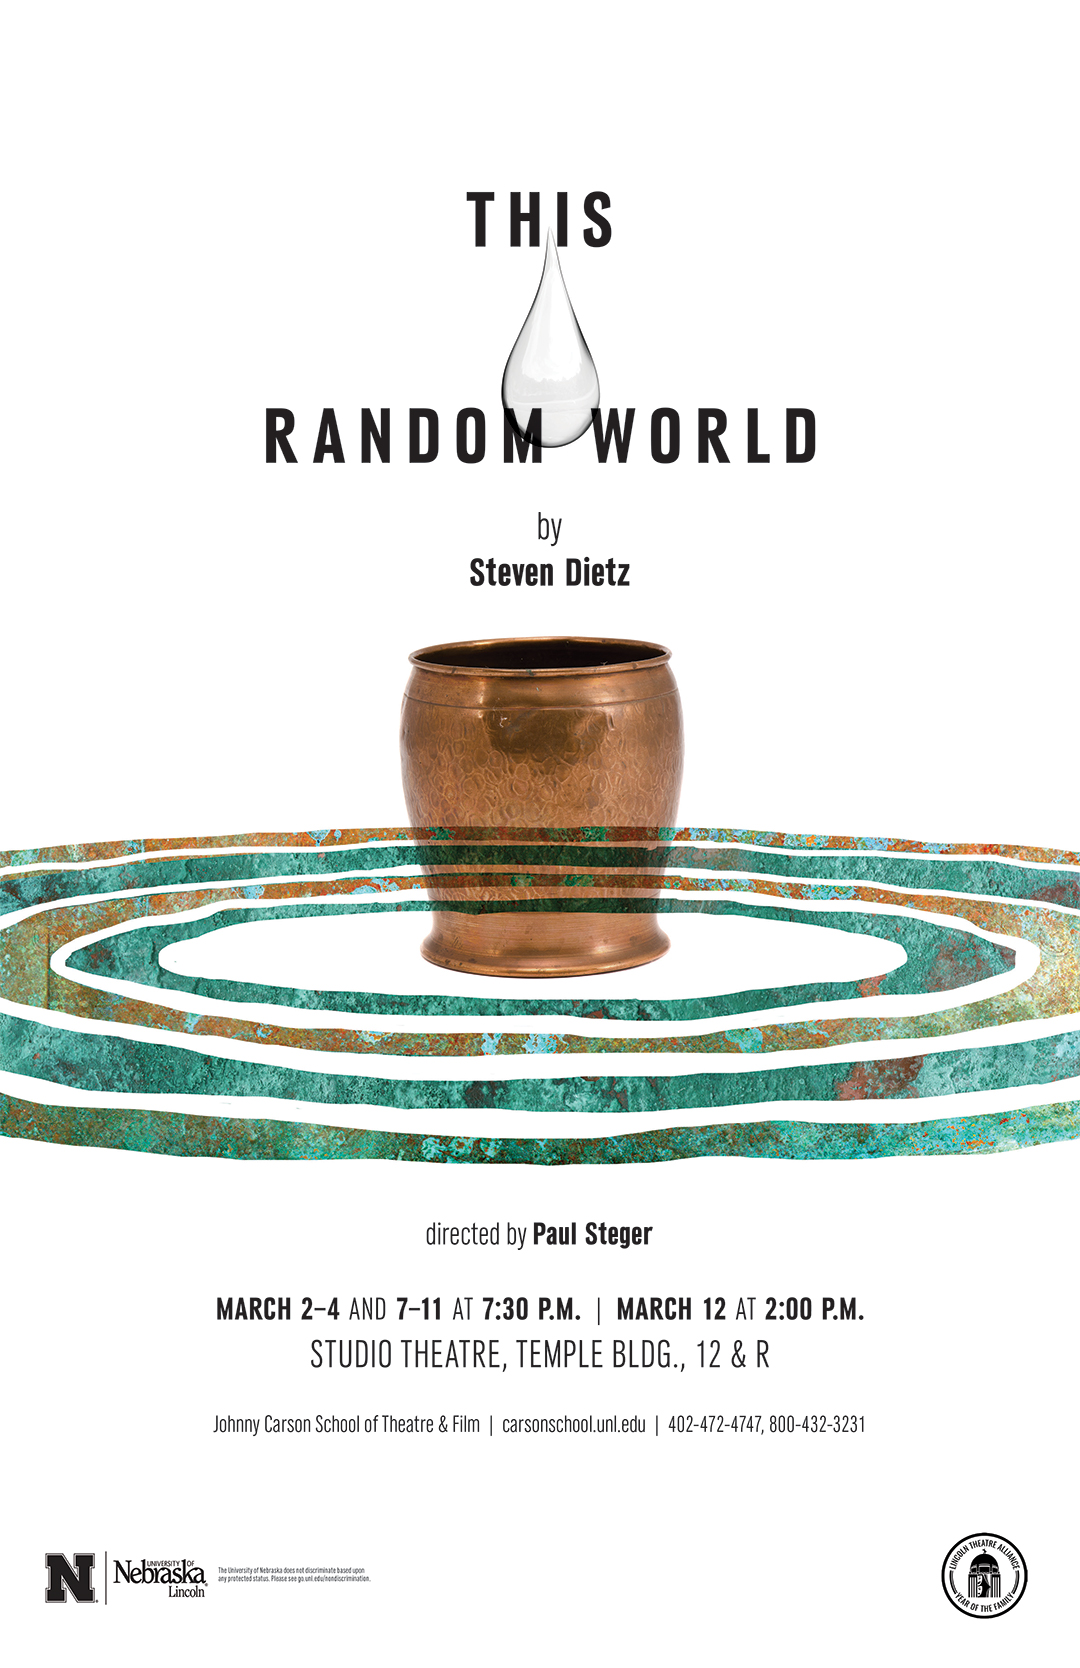 University Theatre presents "This Random World." Performances are March 2-4 and 7-12 in the Studio Theatre.